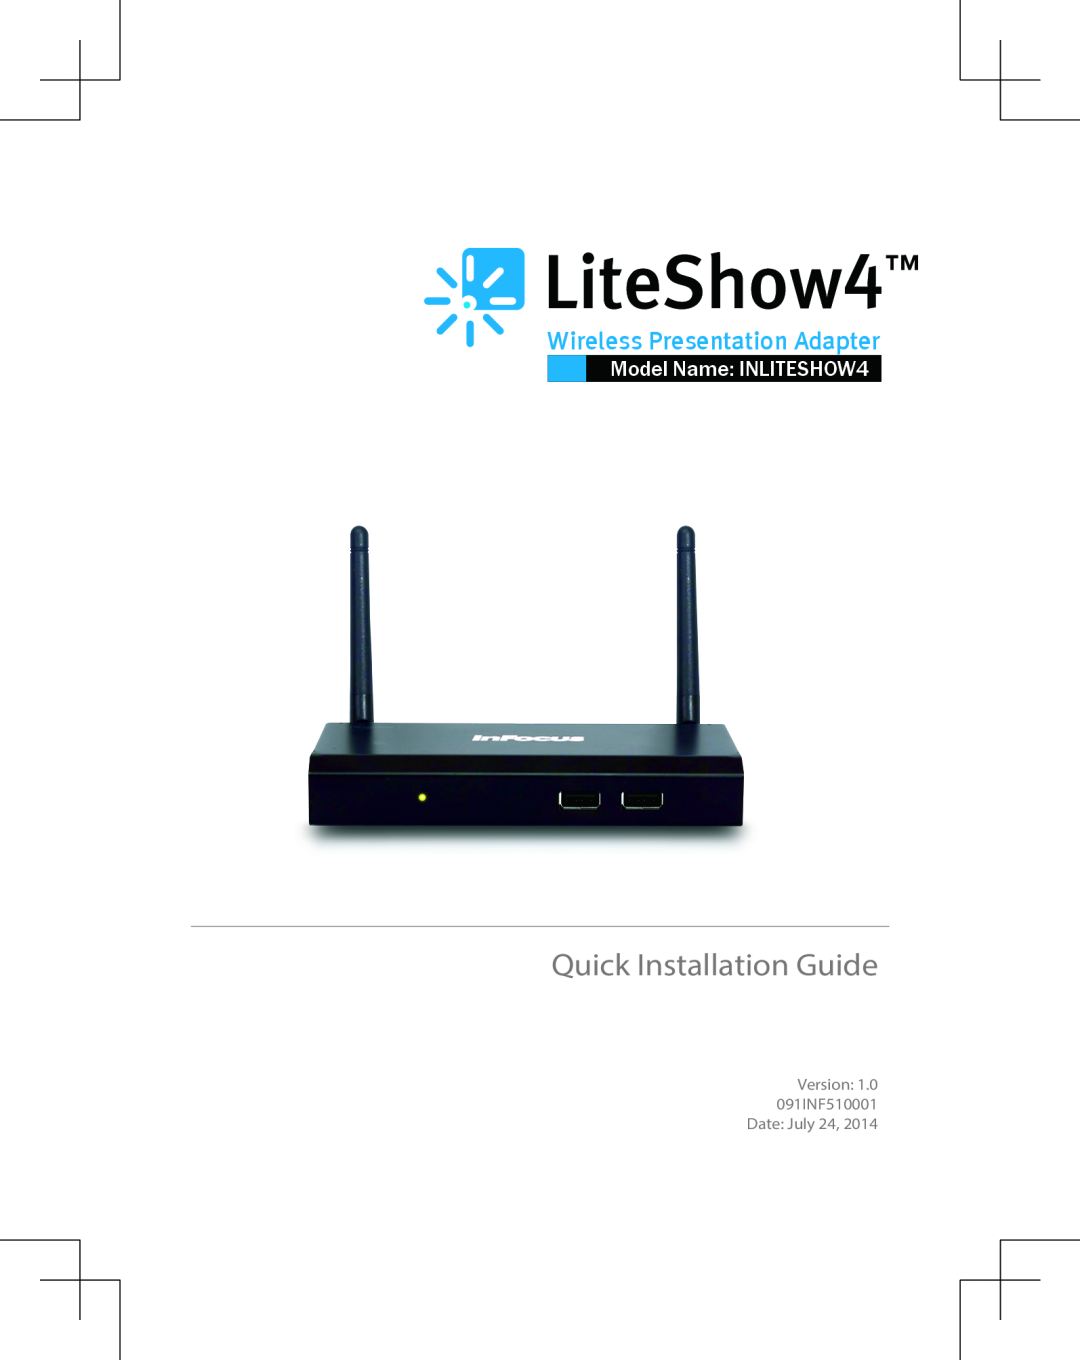 InFocus manual Quick Installation Guide, Wireless Presentation Adapter, Model Name INLITESHOW4 